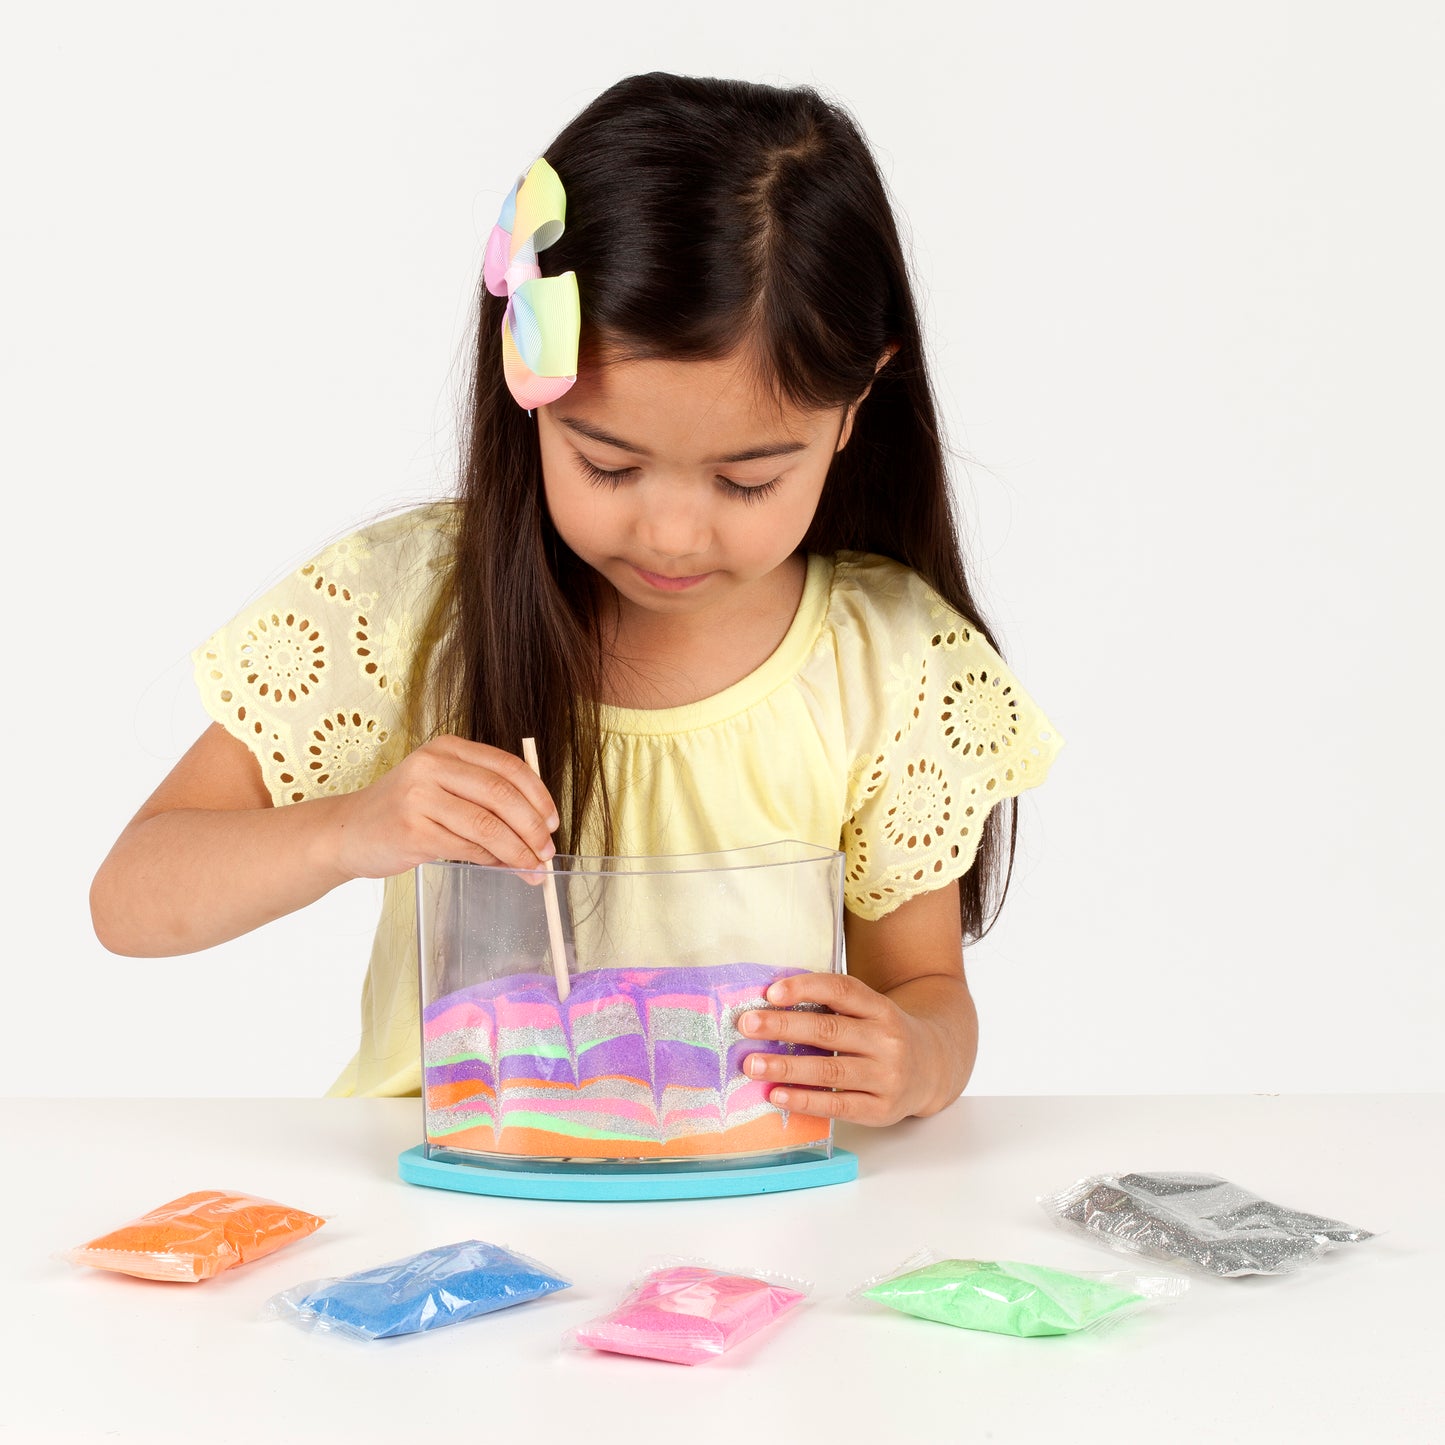 Little girl creating sand art with rainbow sandland kit from faber castell